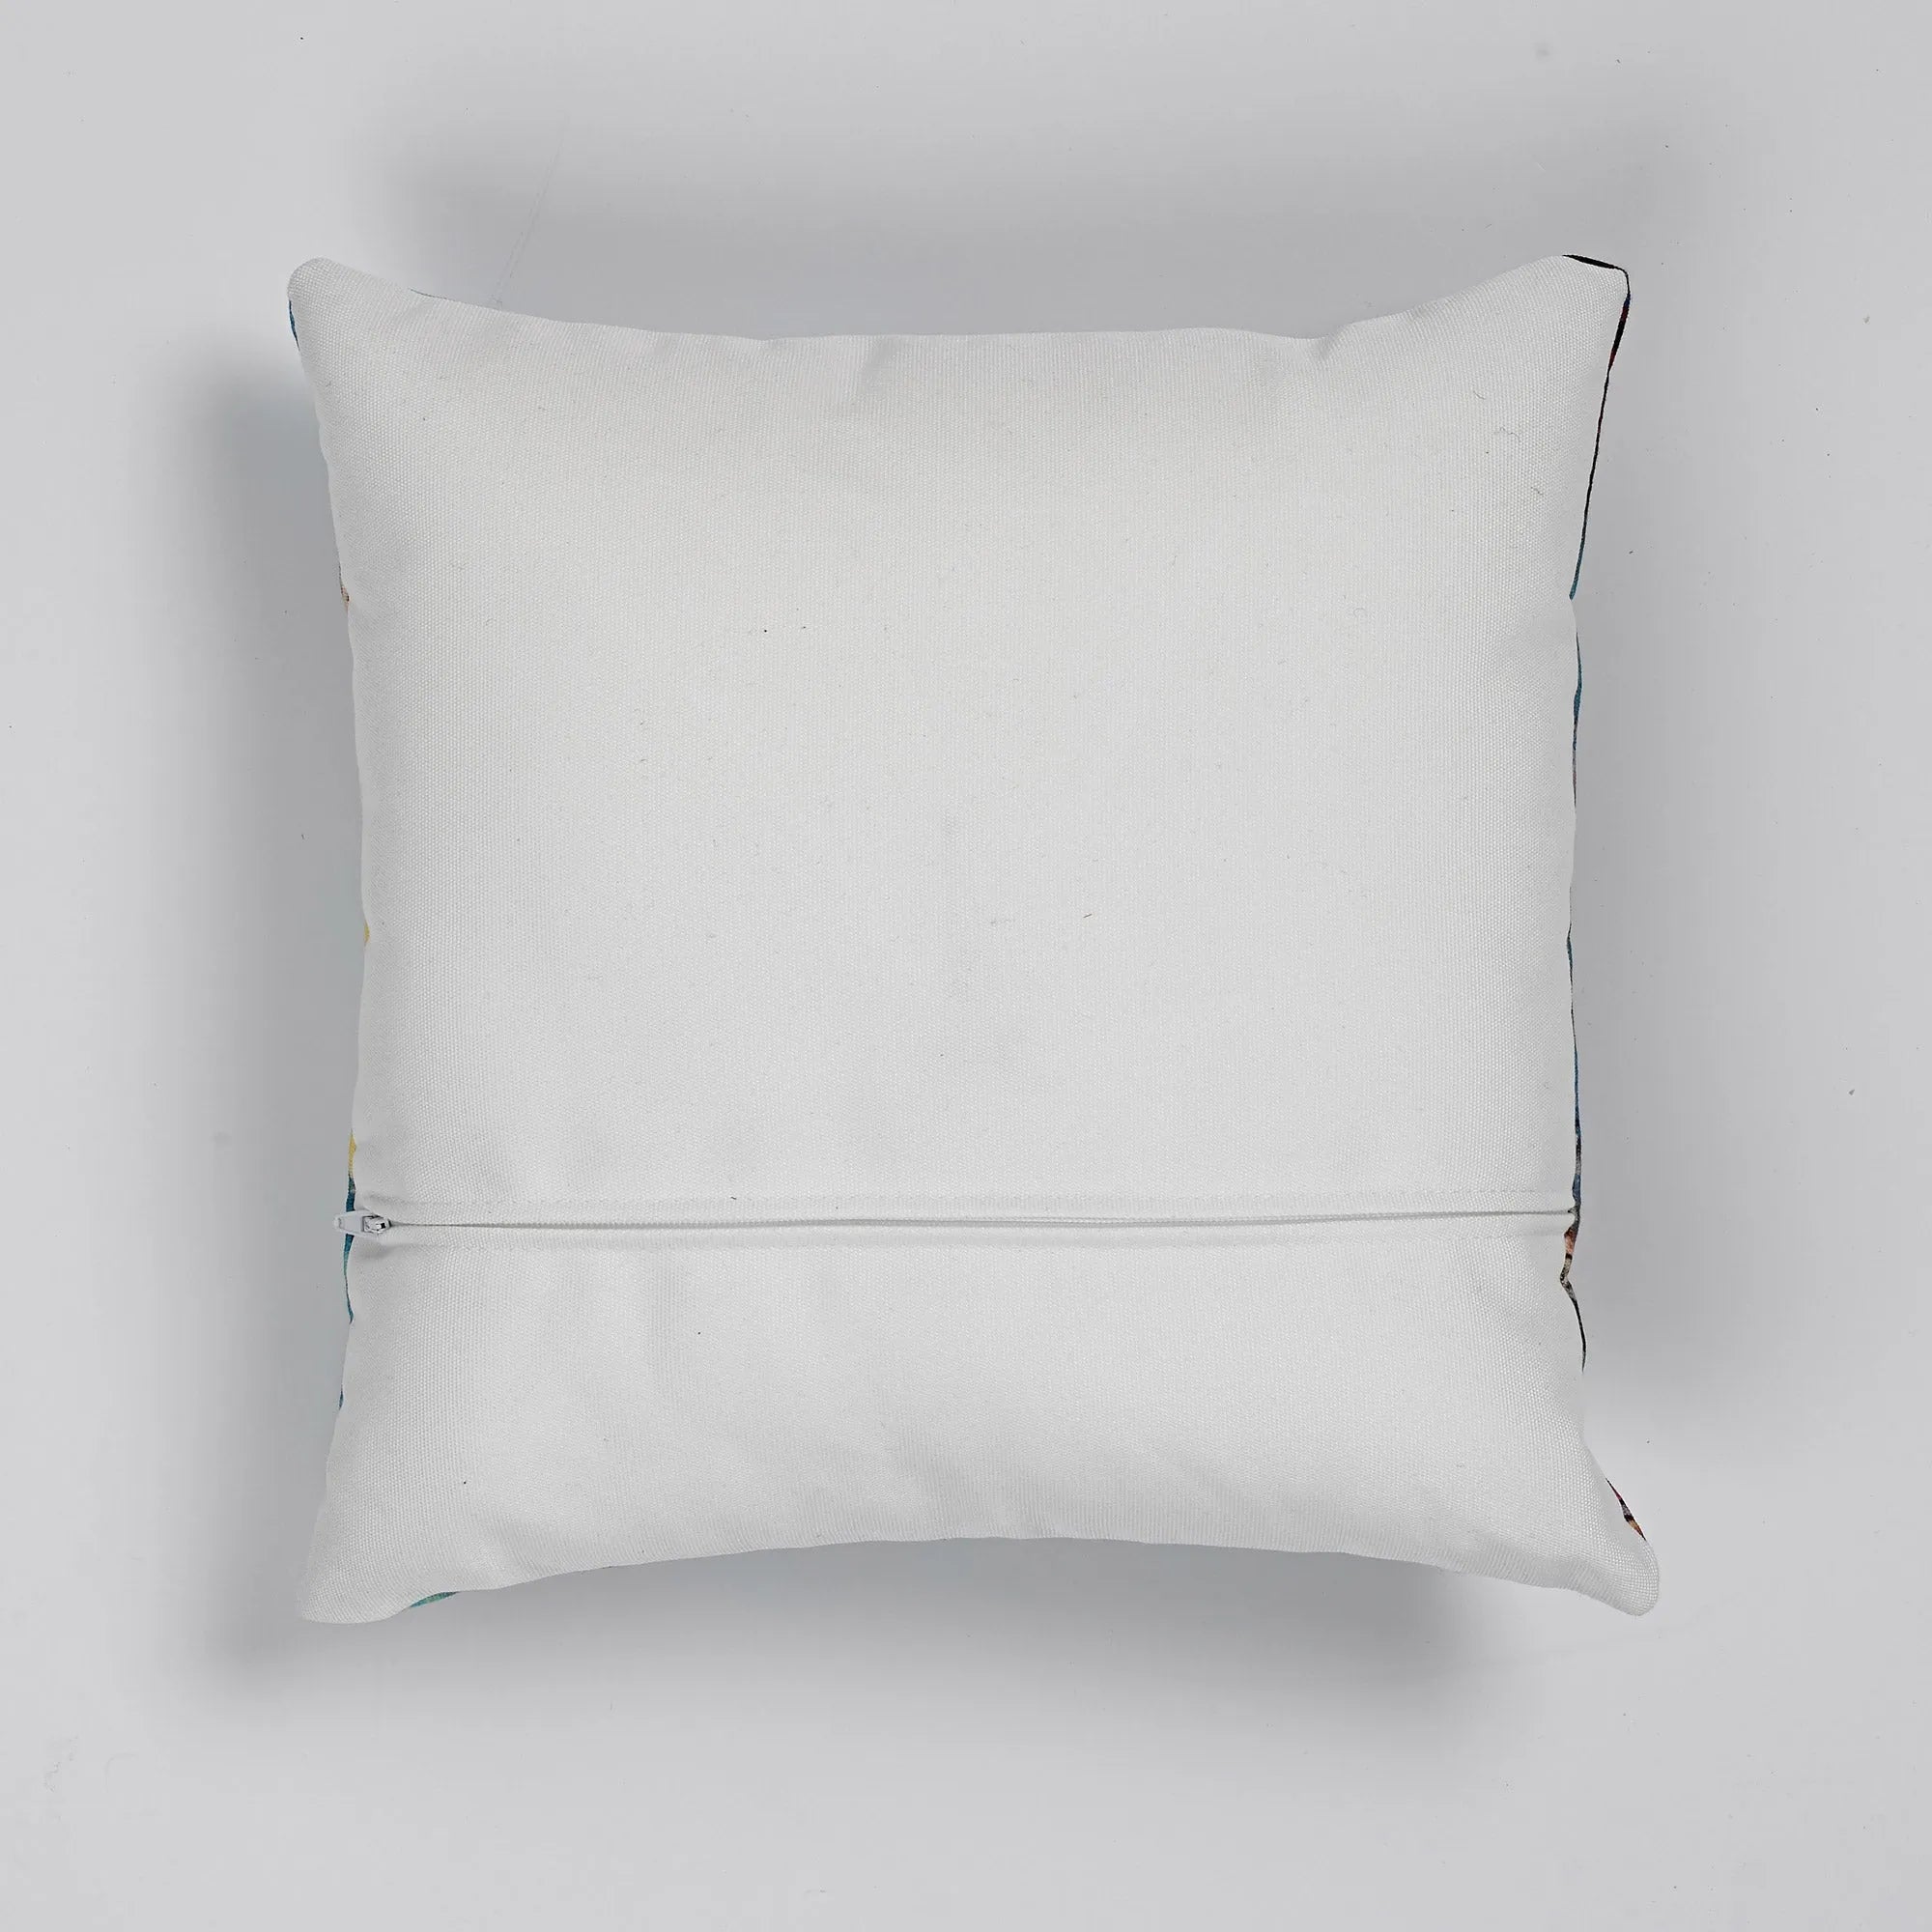 Chinese Buddhist Monk Cushion - Throw Pillows - Aesthetic Art